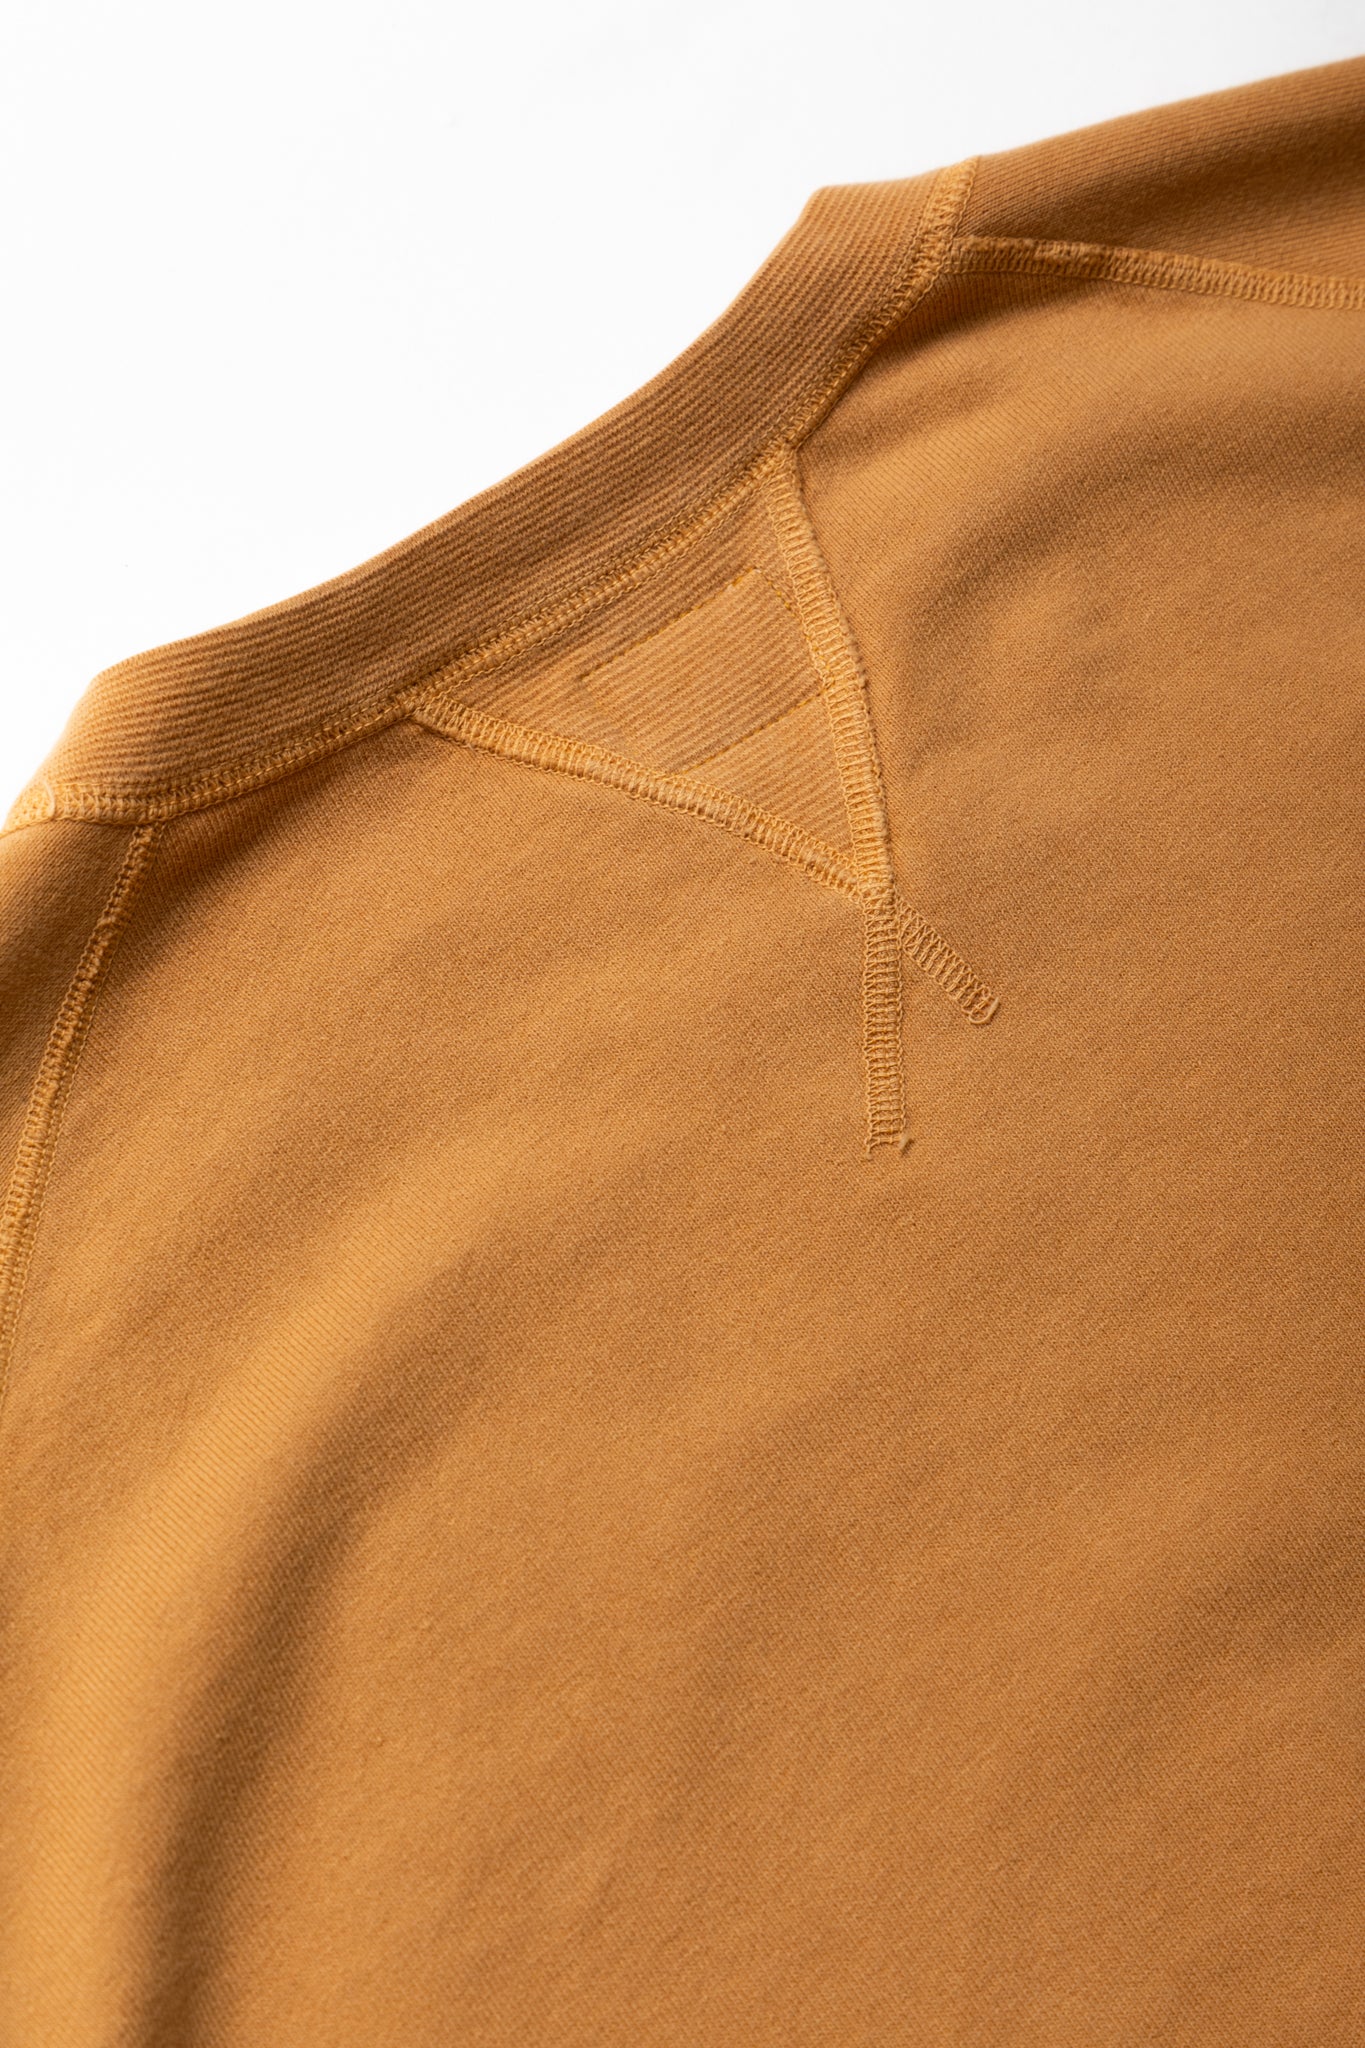 McHill Sports Wear S/S Sweatshirt - Gold